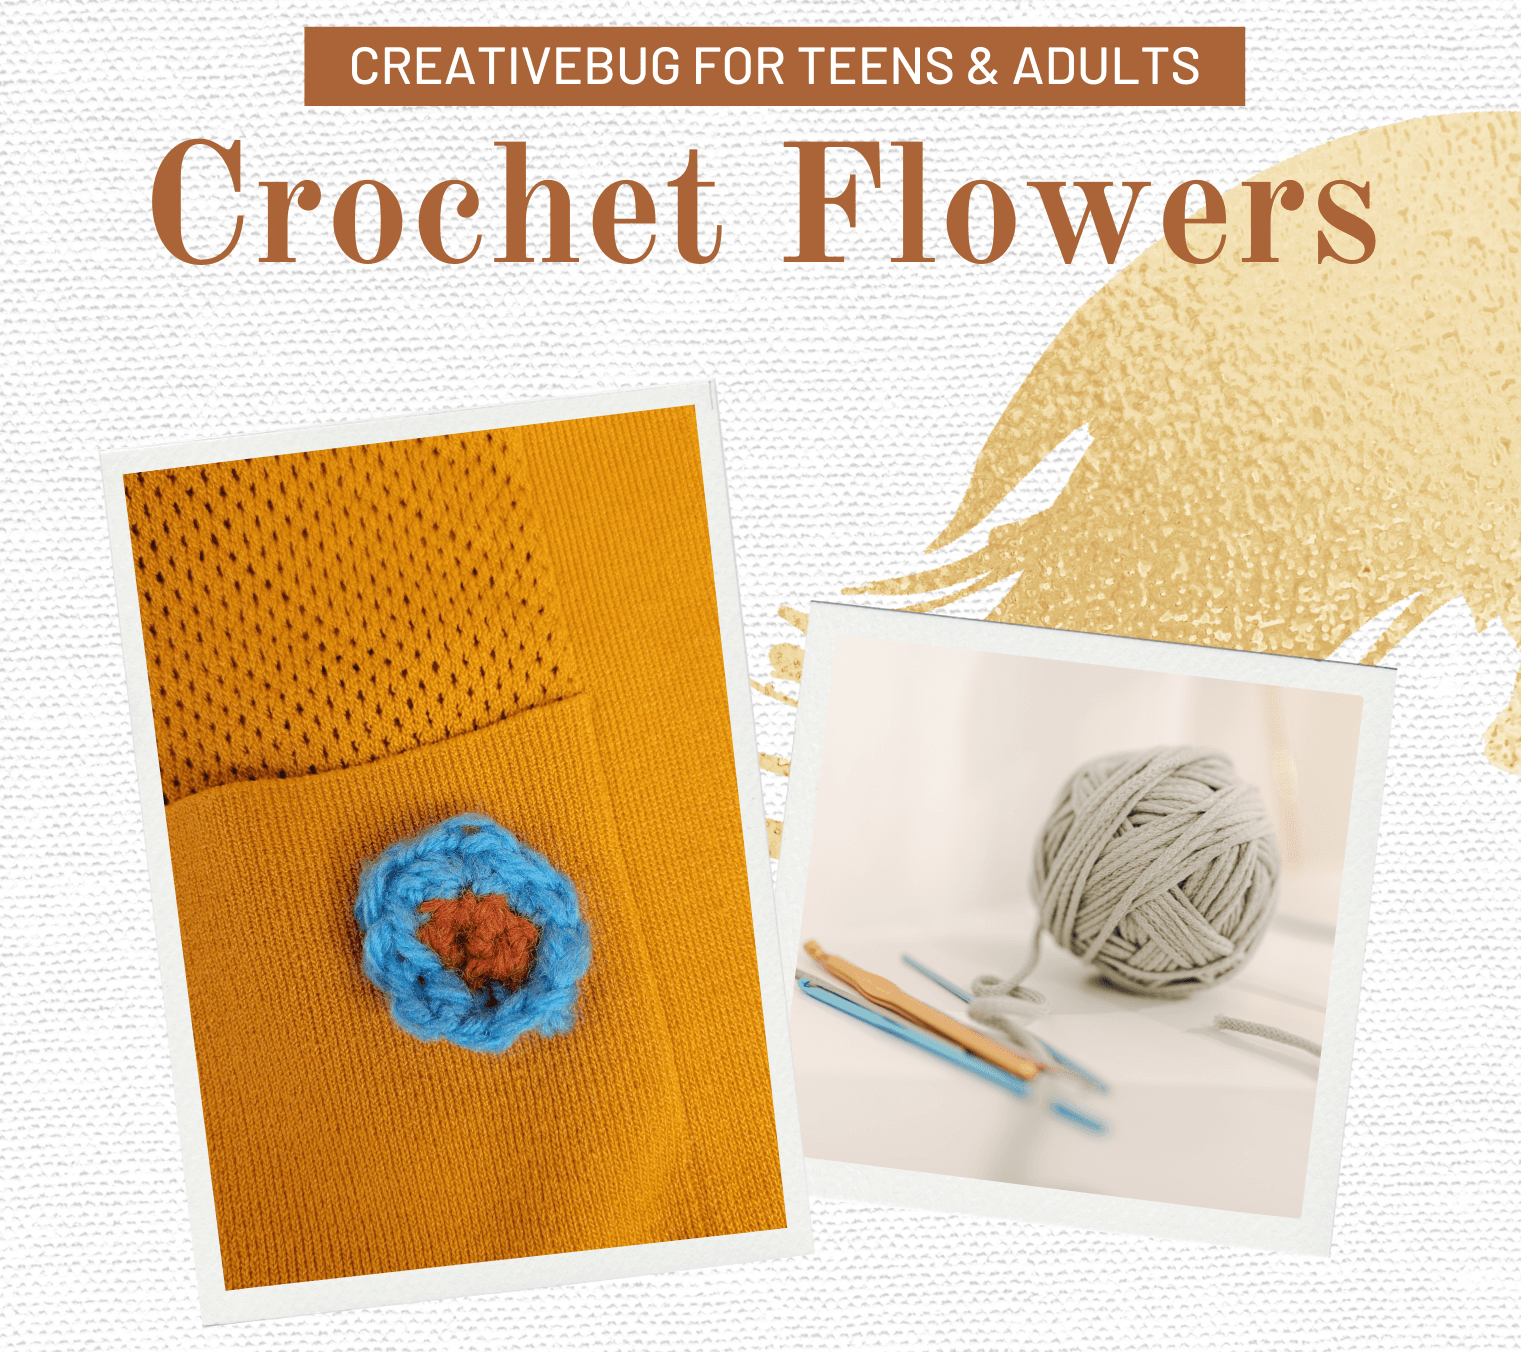 Creativebug for Teens & Adults: Crochet Flowers